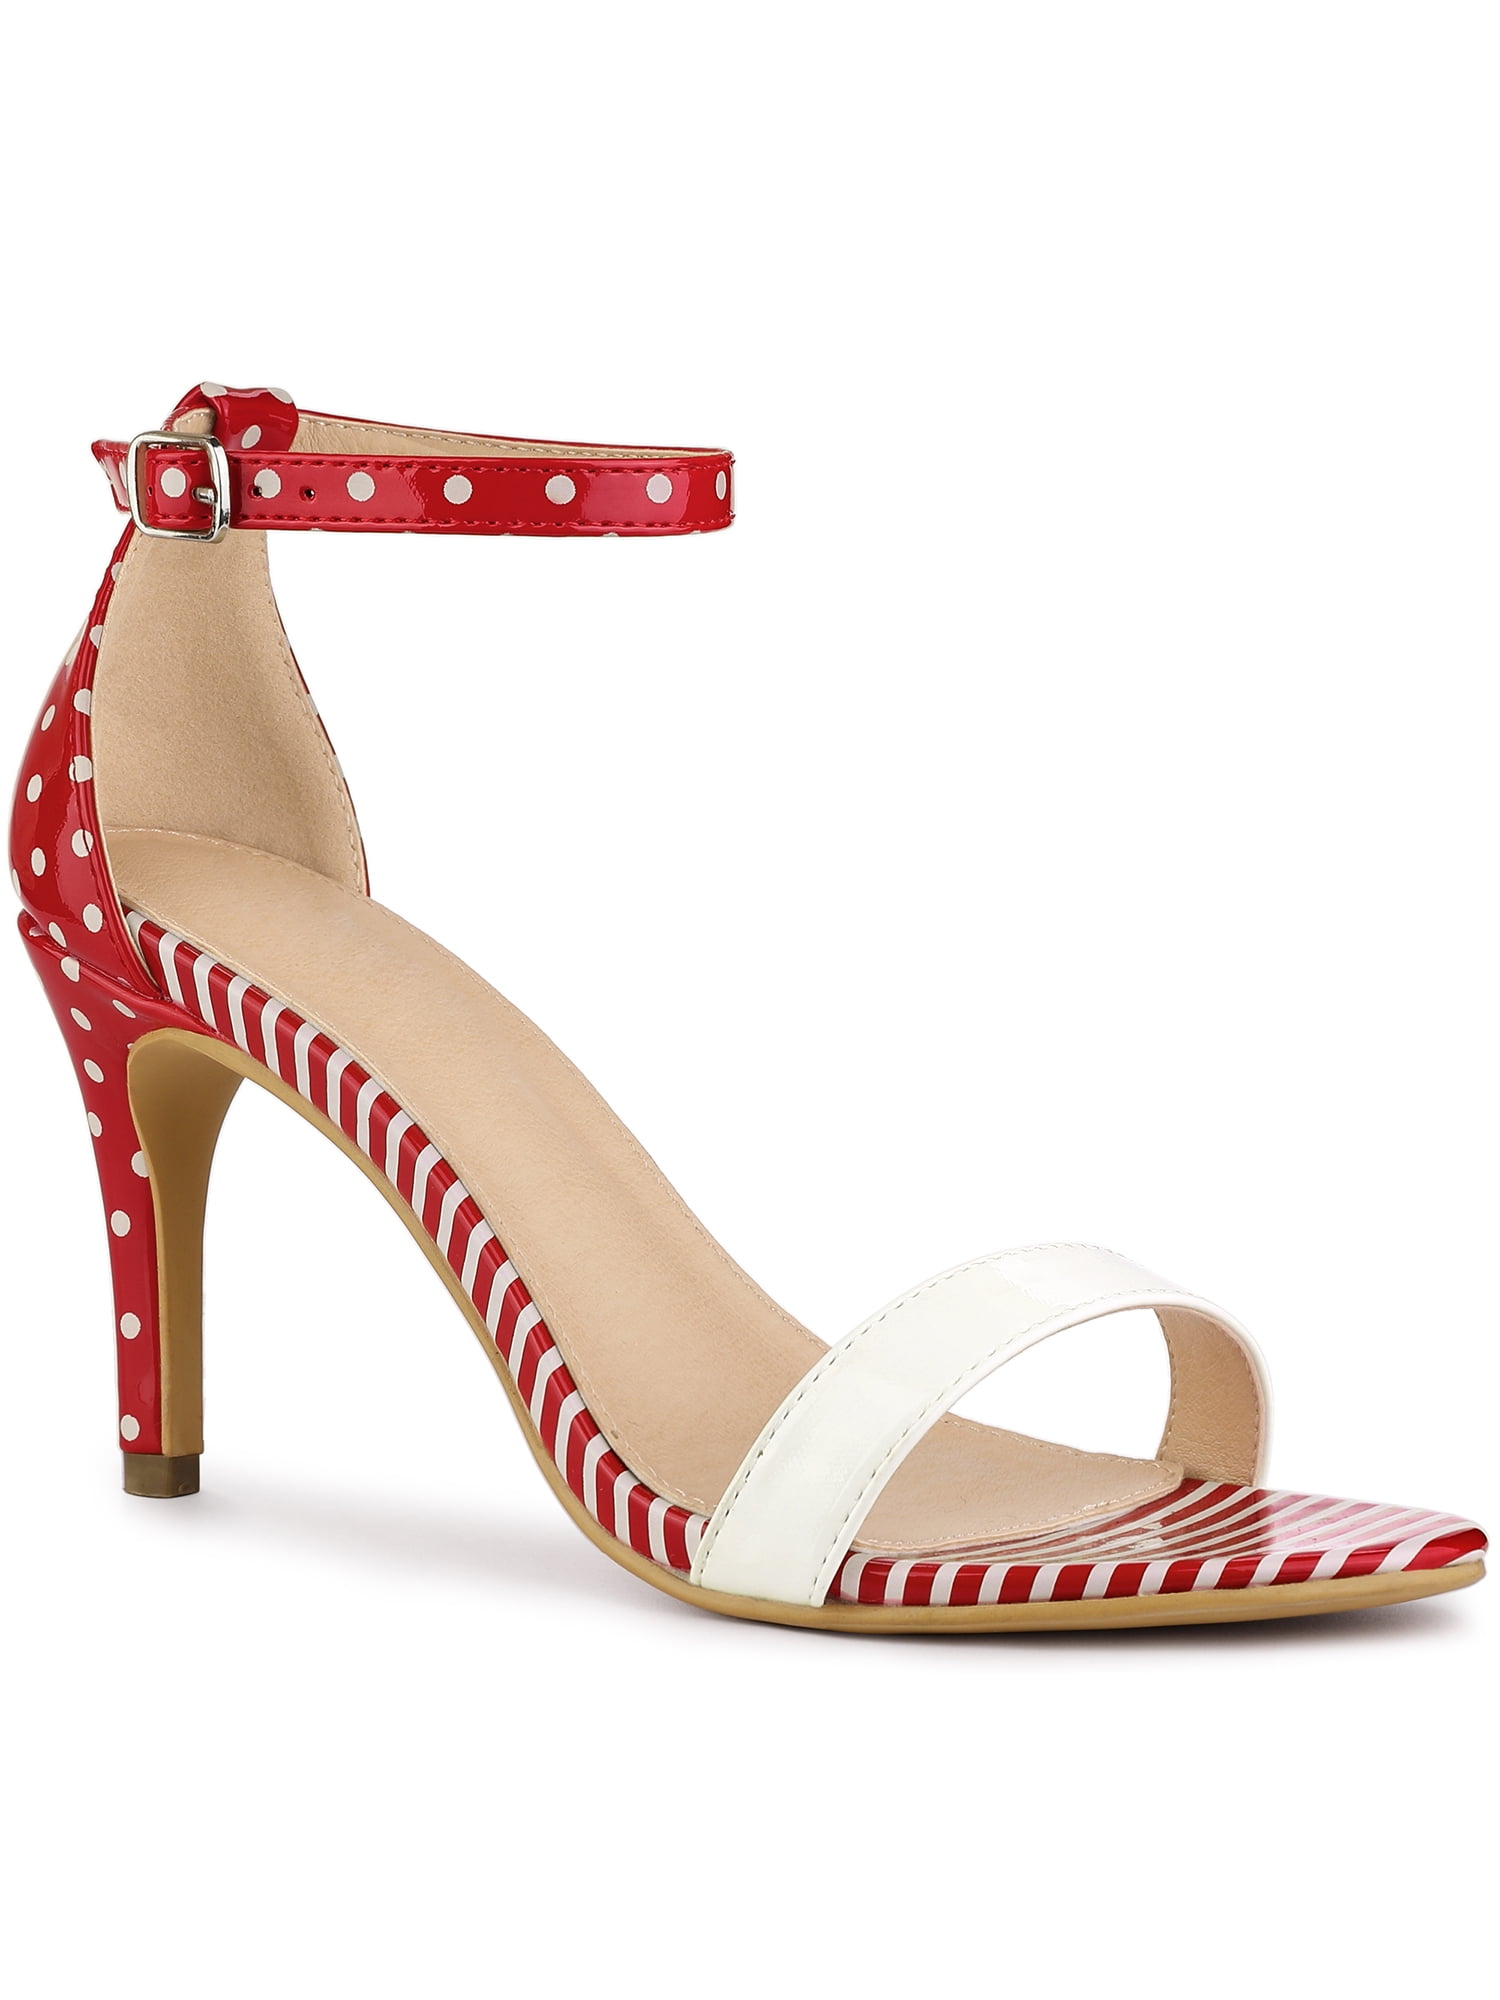 Perphy Women's Sandals Stiletto Heels Stripe Ankle Strap Polka Dots ...